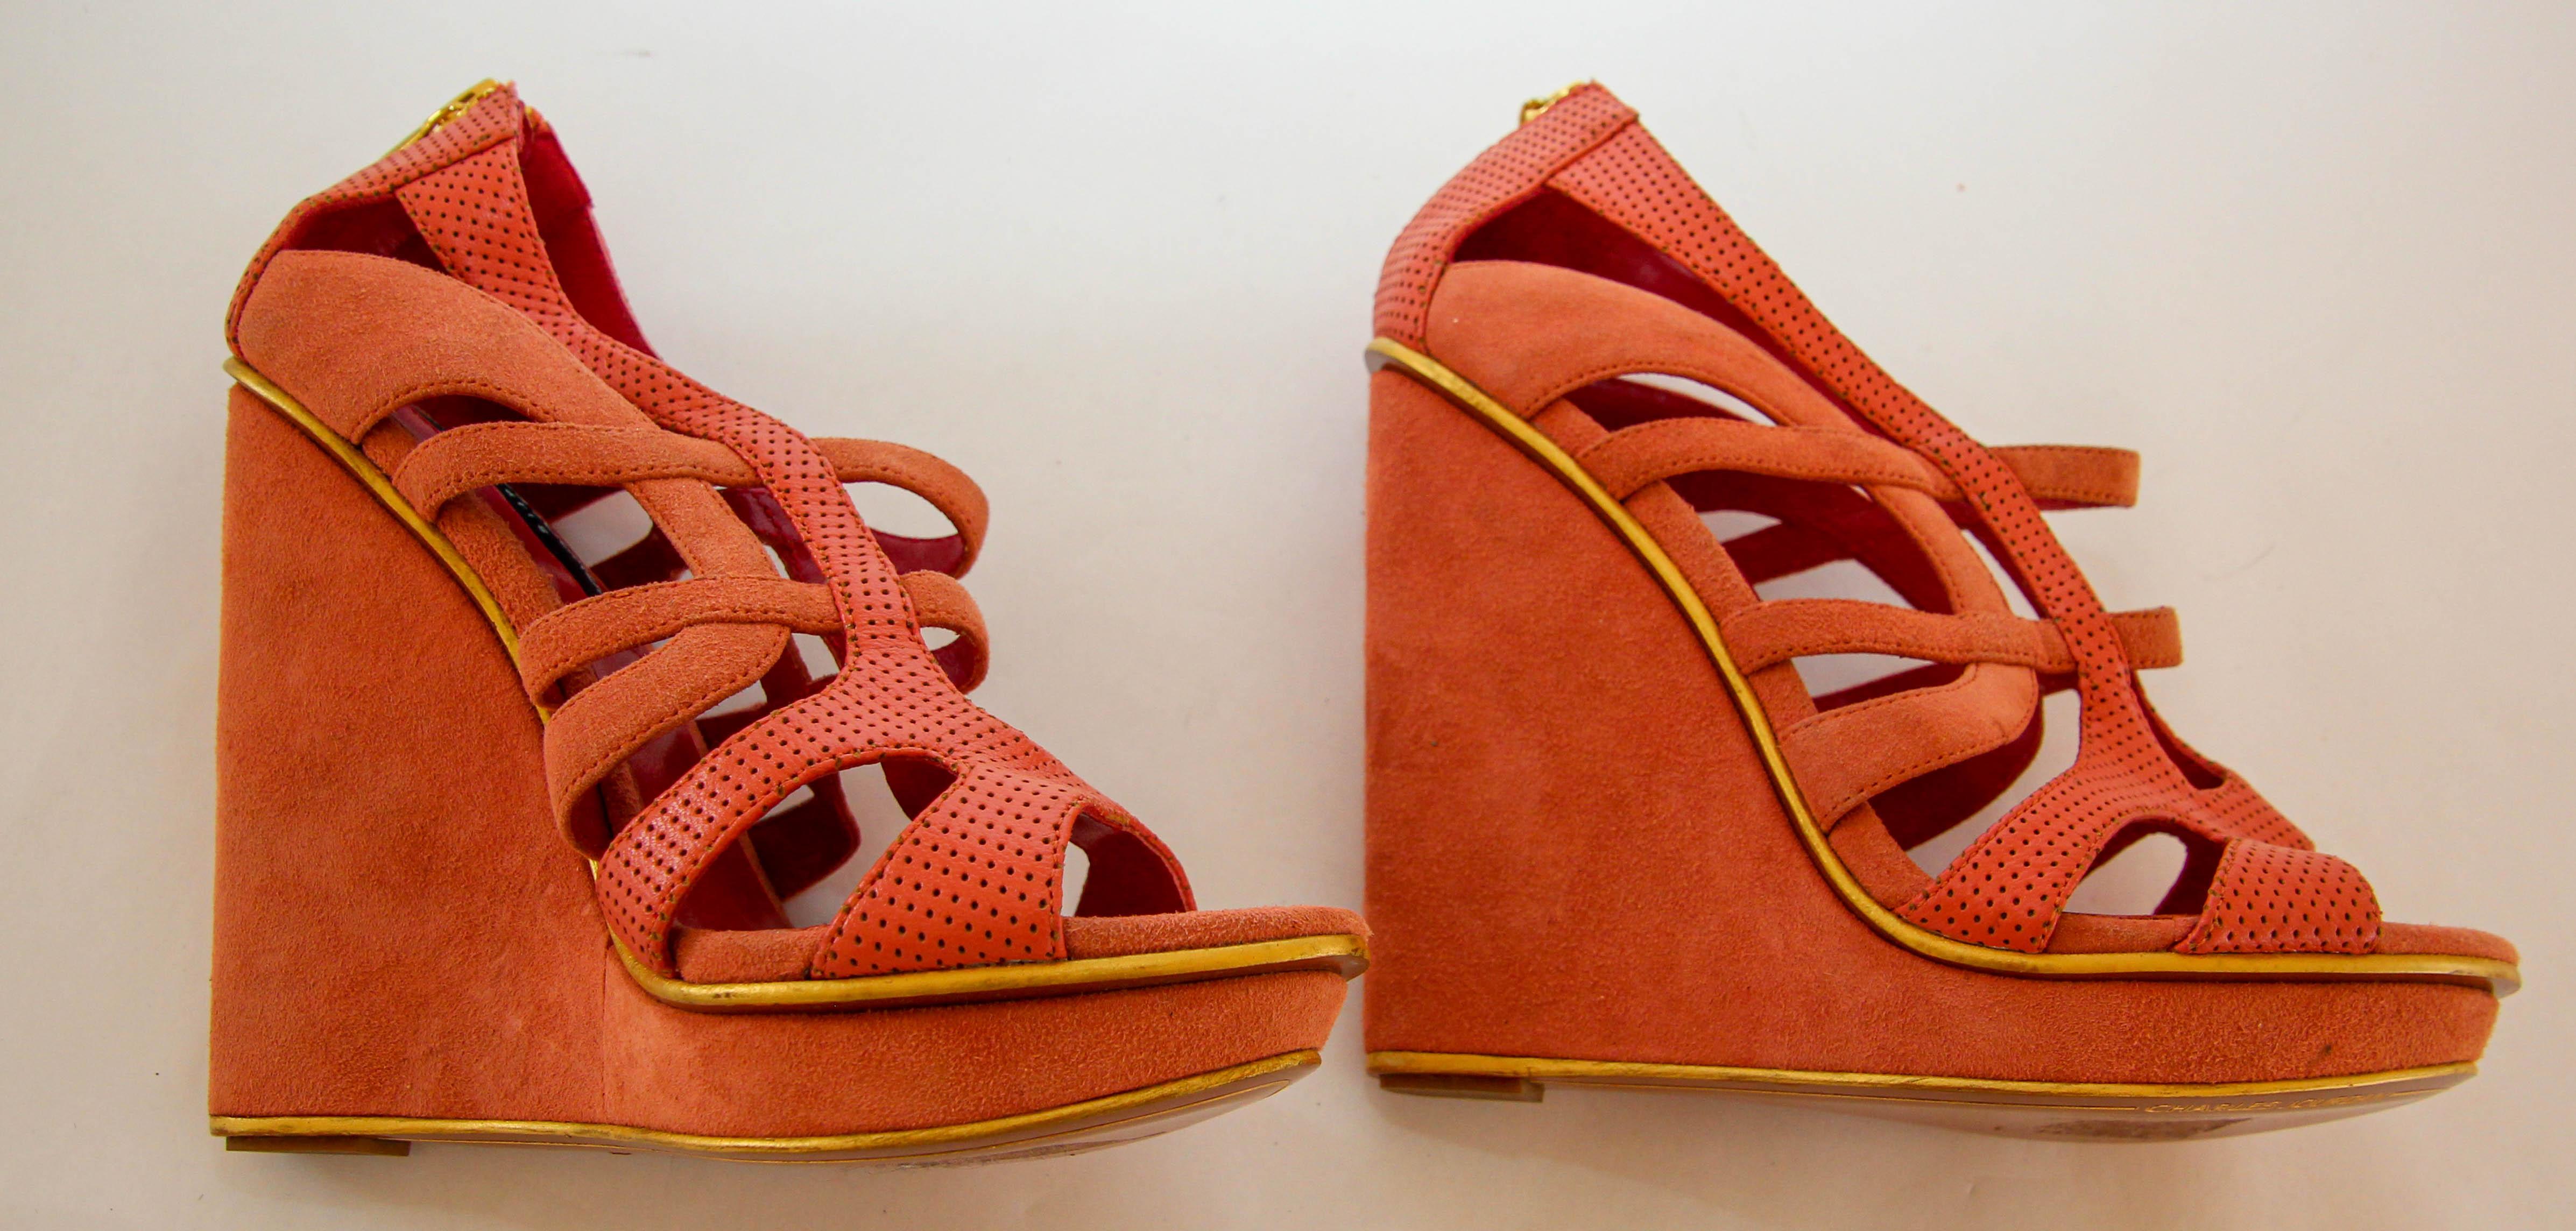 Charles Jourdan Paris Orange Wedge Sandals Size US 6 EU 36 For Sale 8